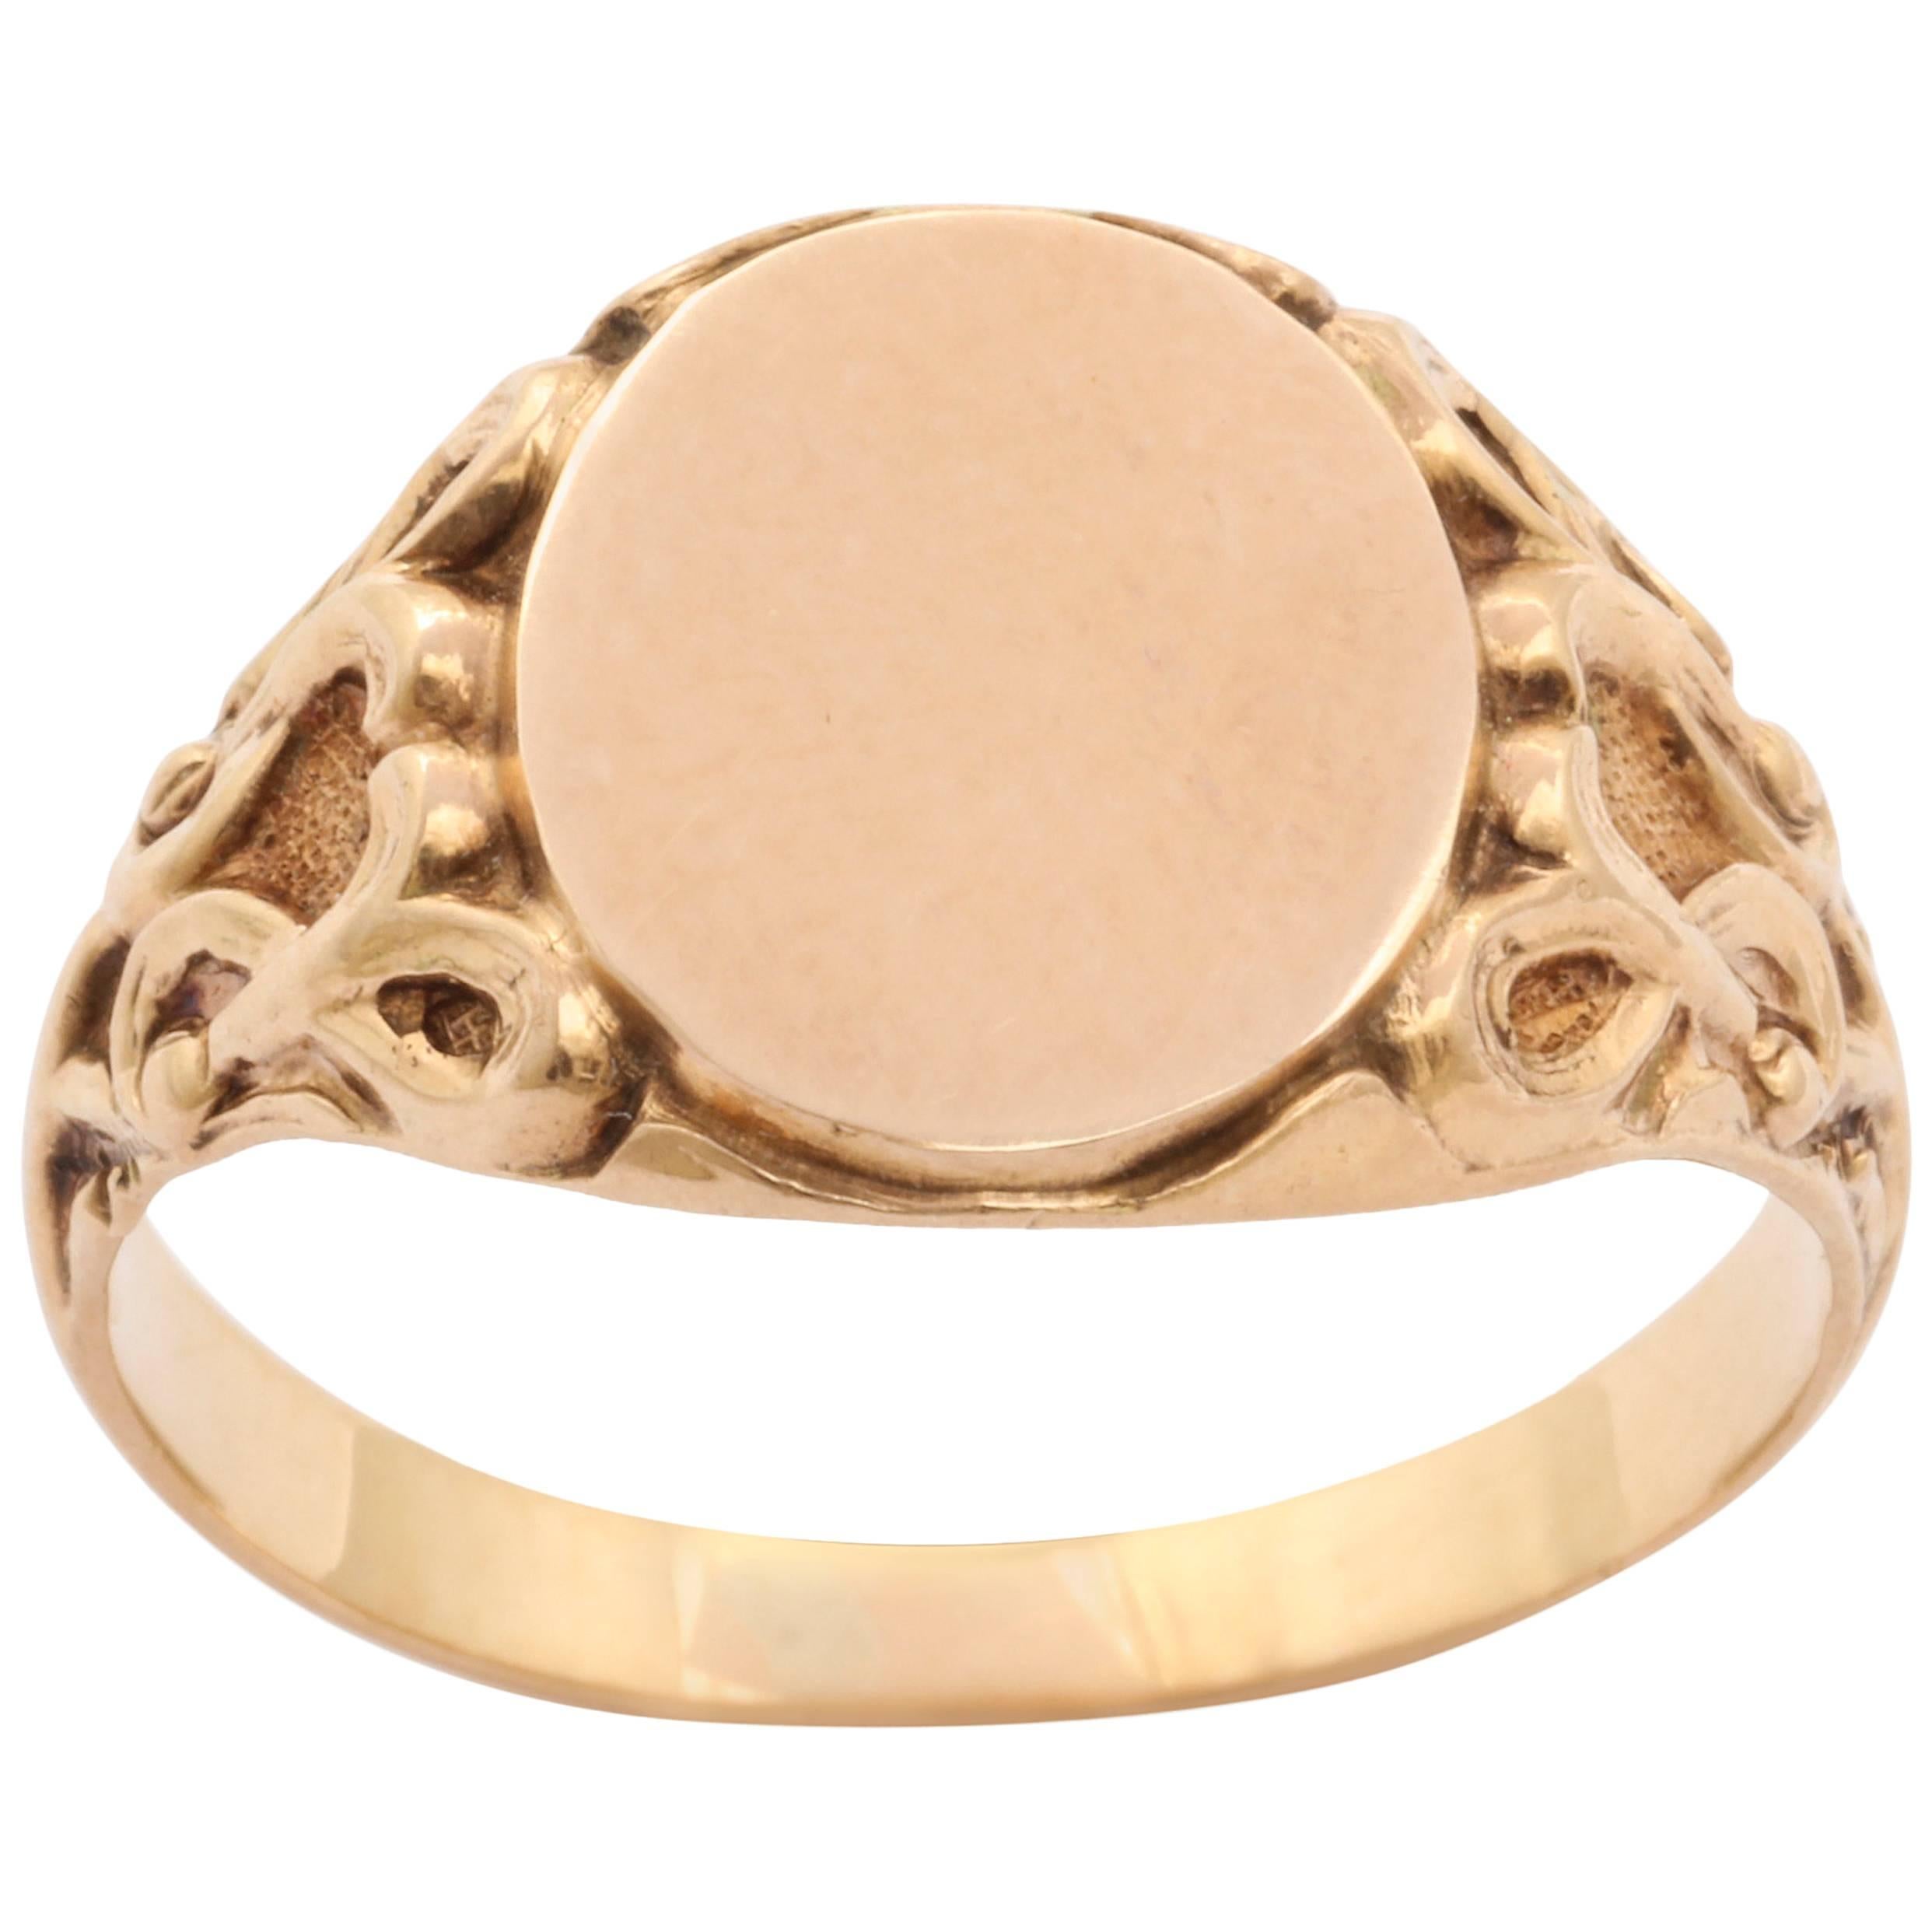 Elegant Edwardian Gold Signet Ring